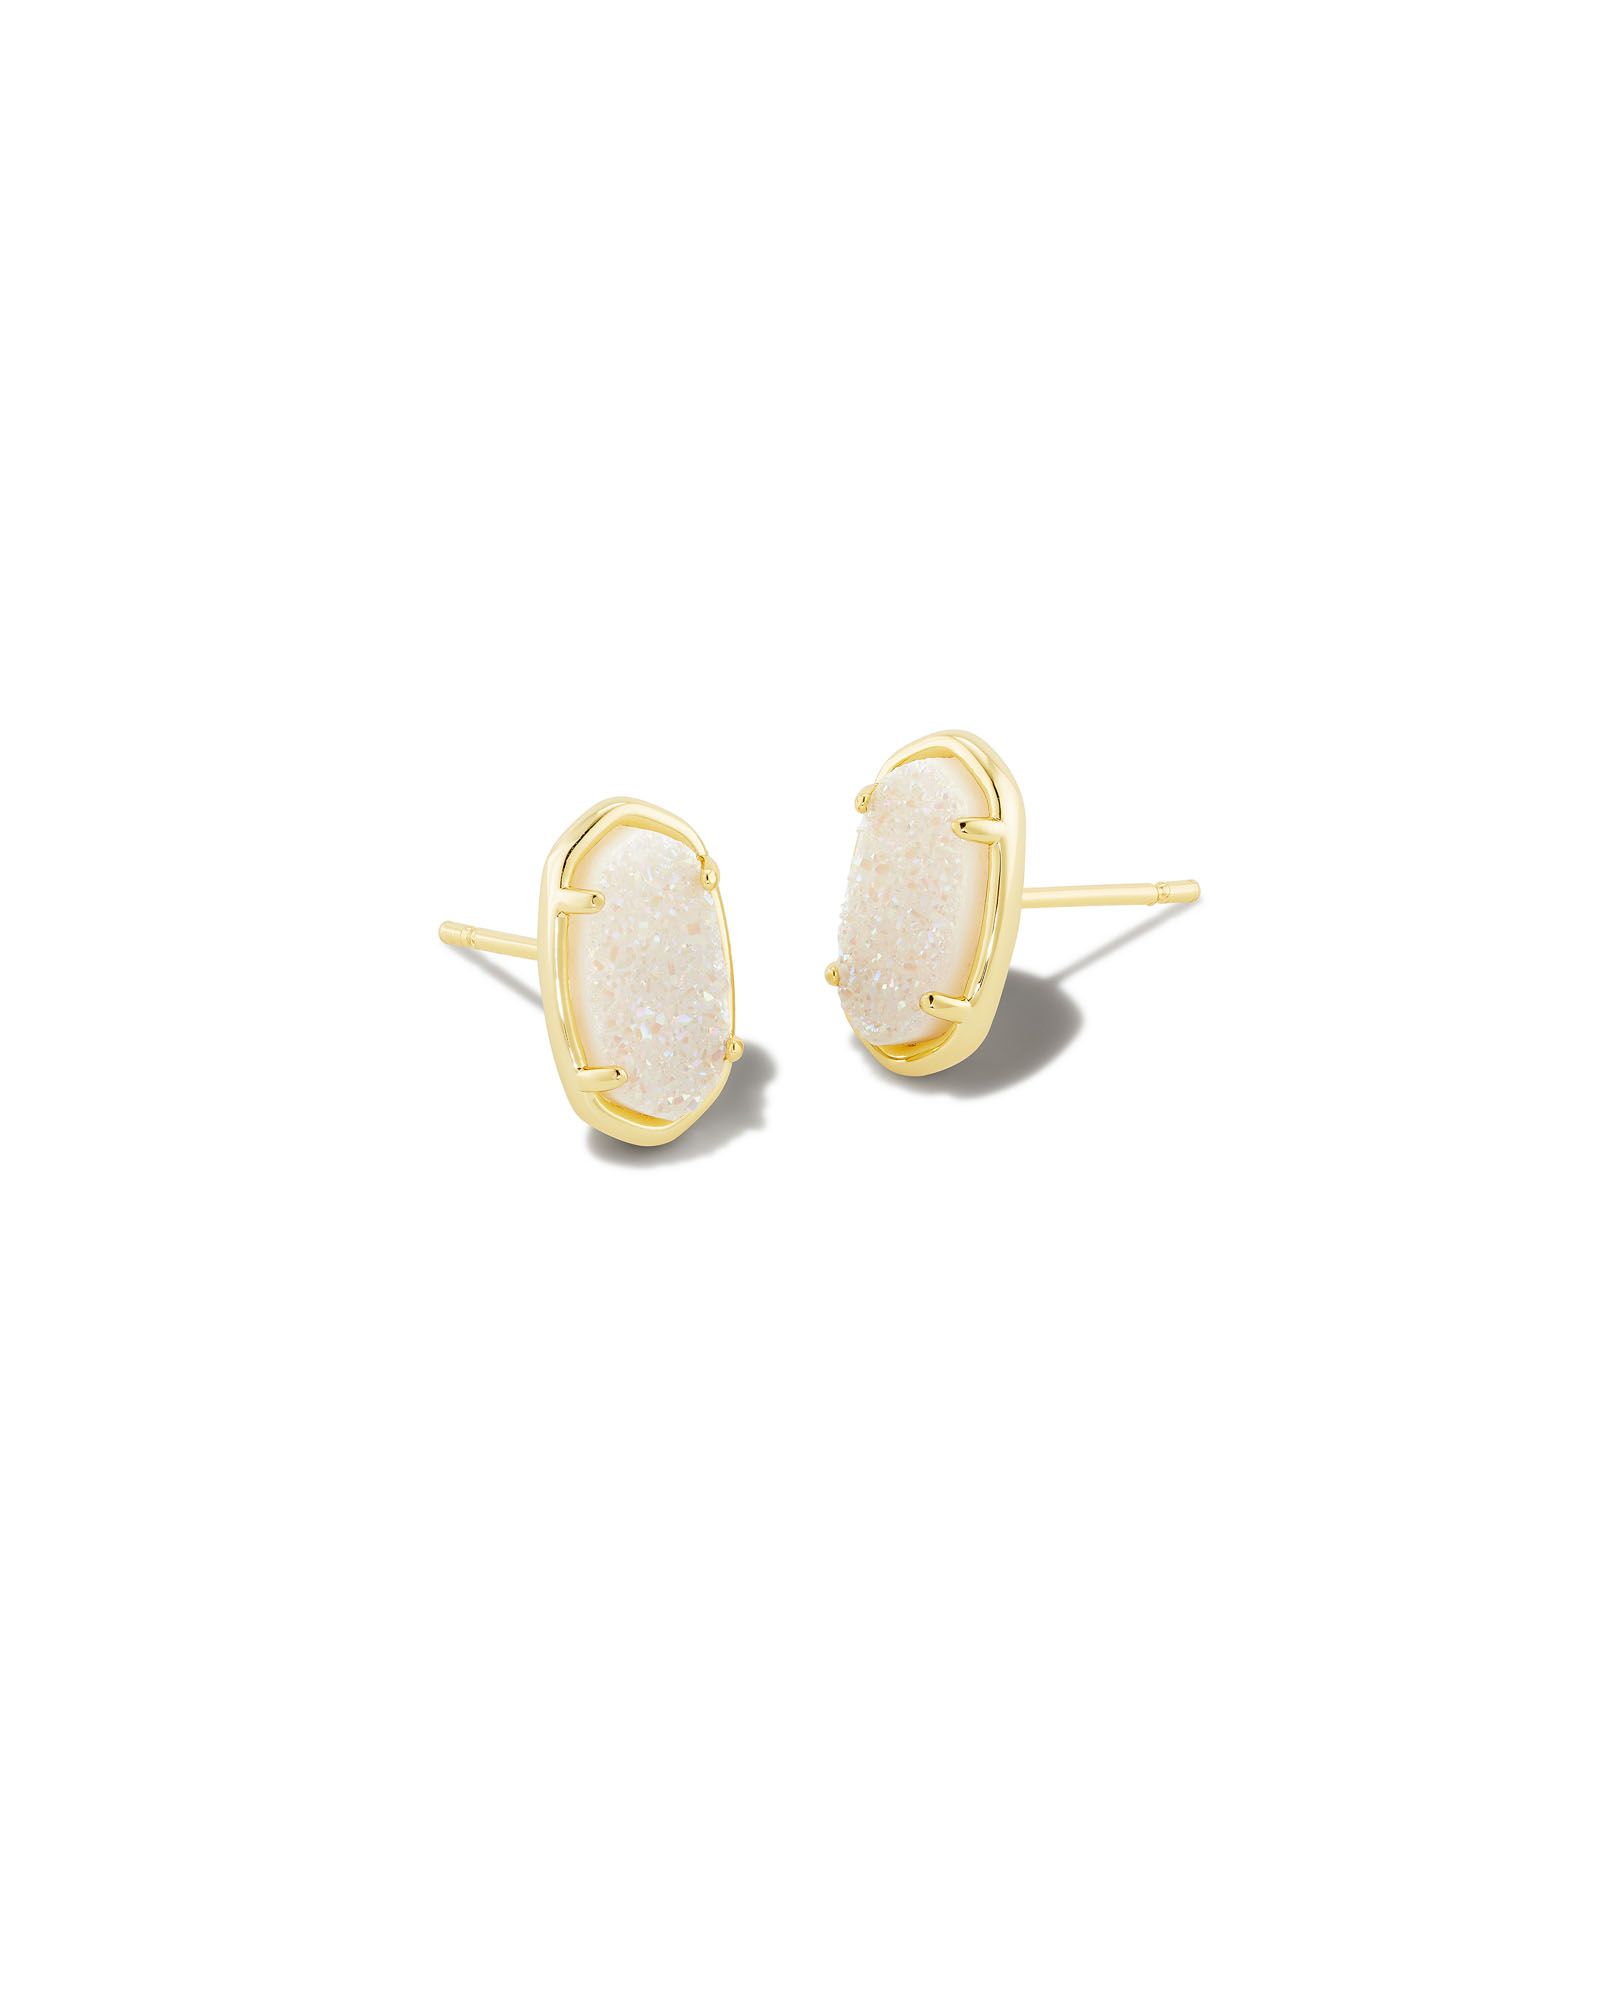 Grayson Gold Stud Earrings in Iridescent Drusy | Kendra Scott | Kendra Scott